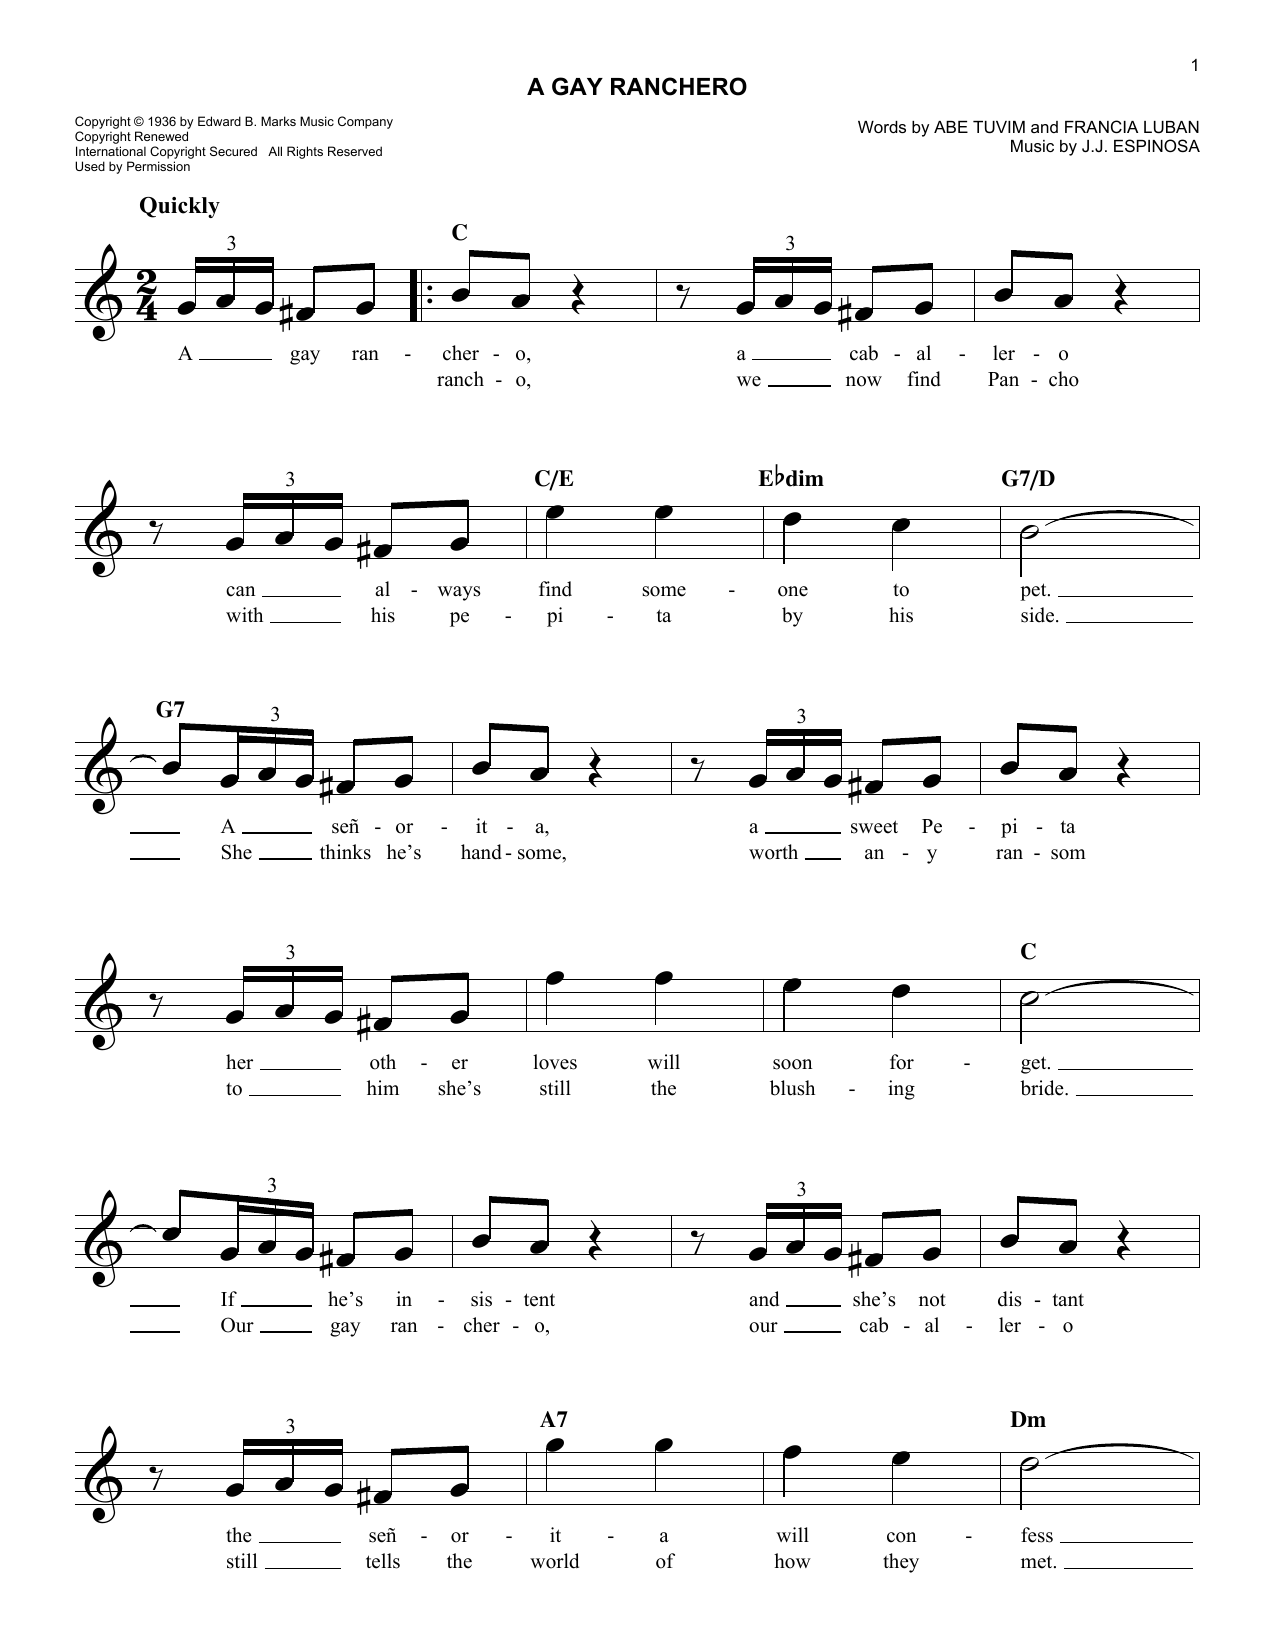 Abe Tuvim A Gay Ranchero Sheet Music Notes & Chords for Melody Line, Lyrics & Chords - Download or Print PDF